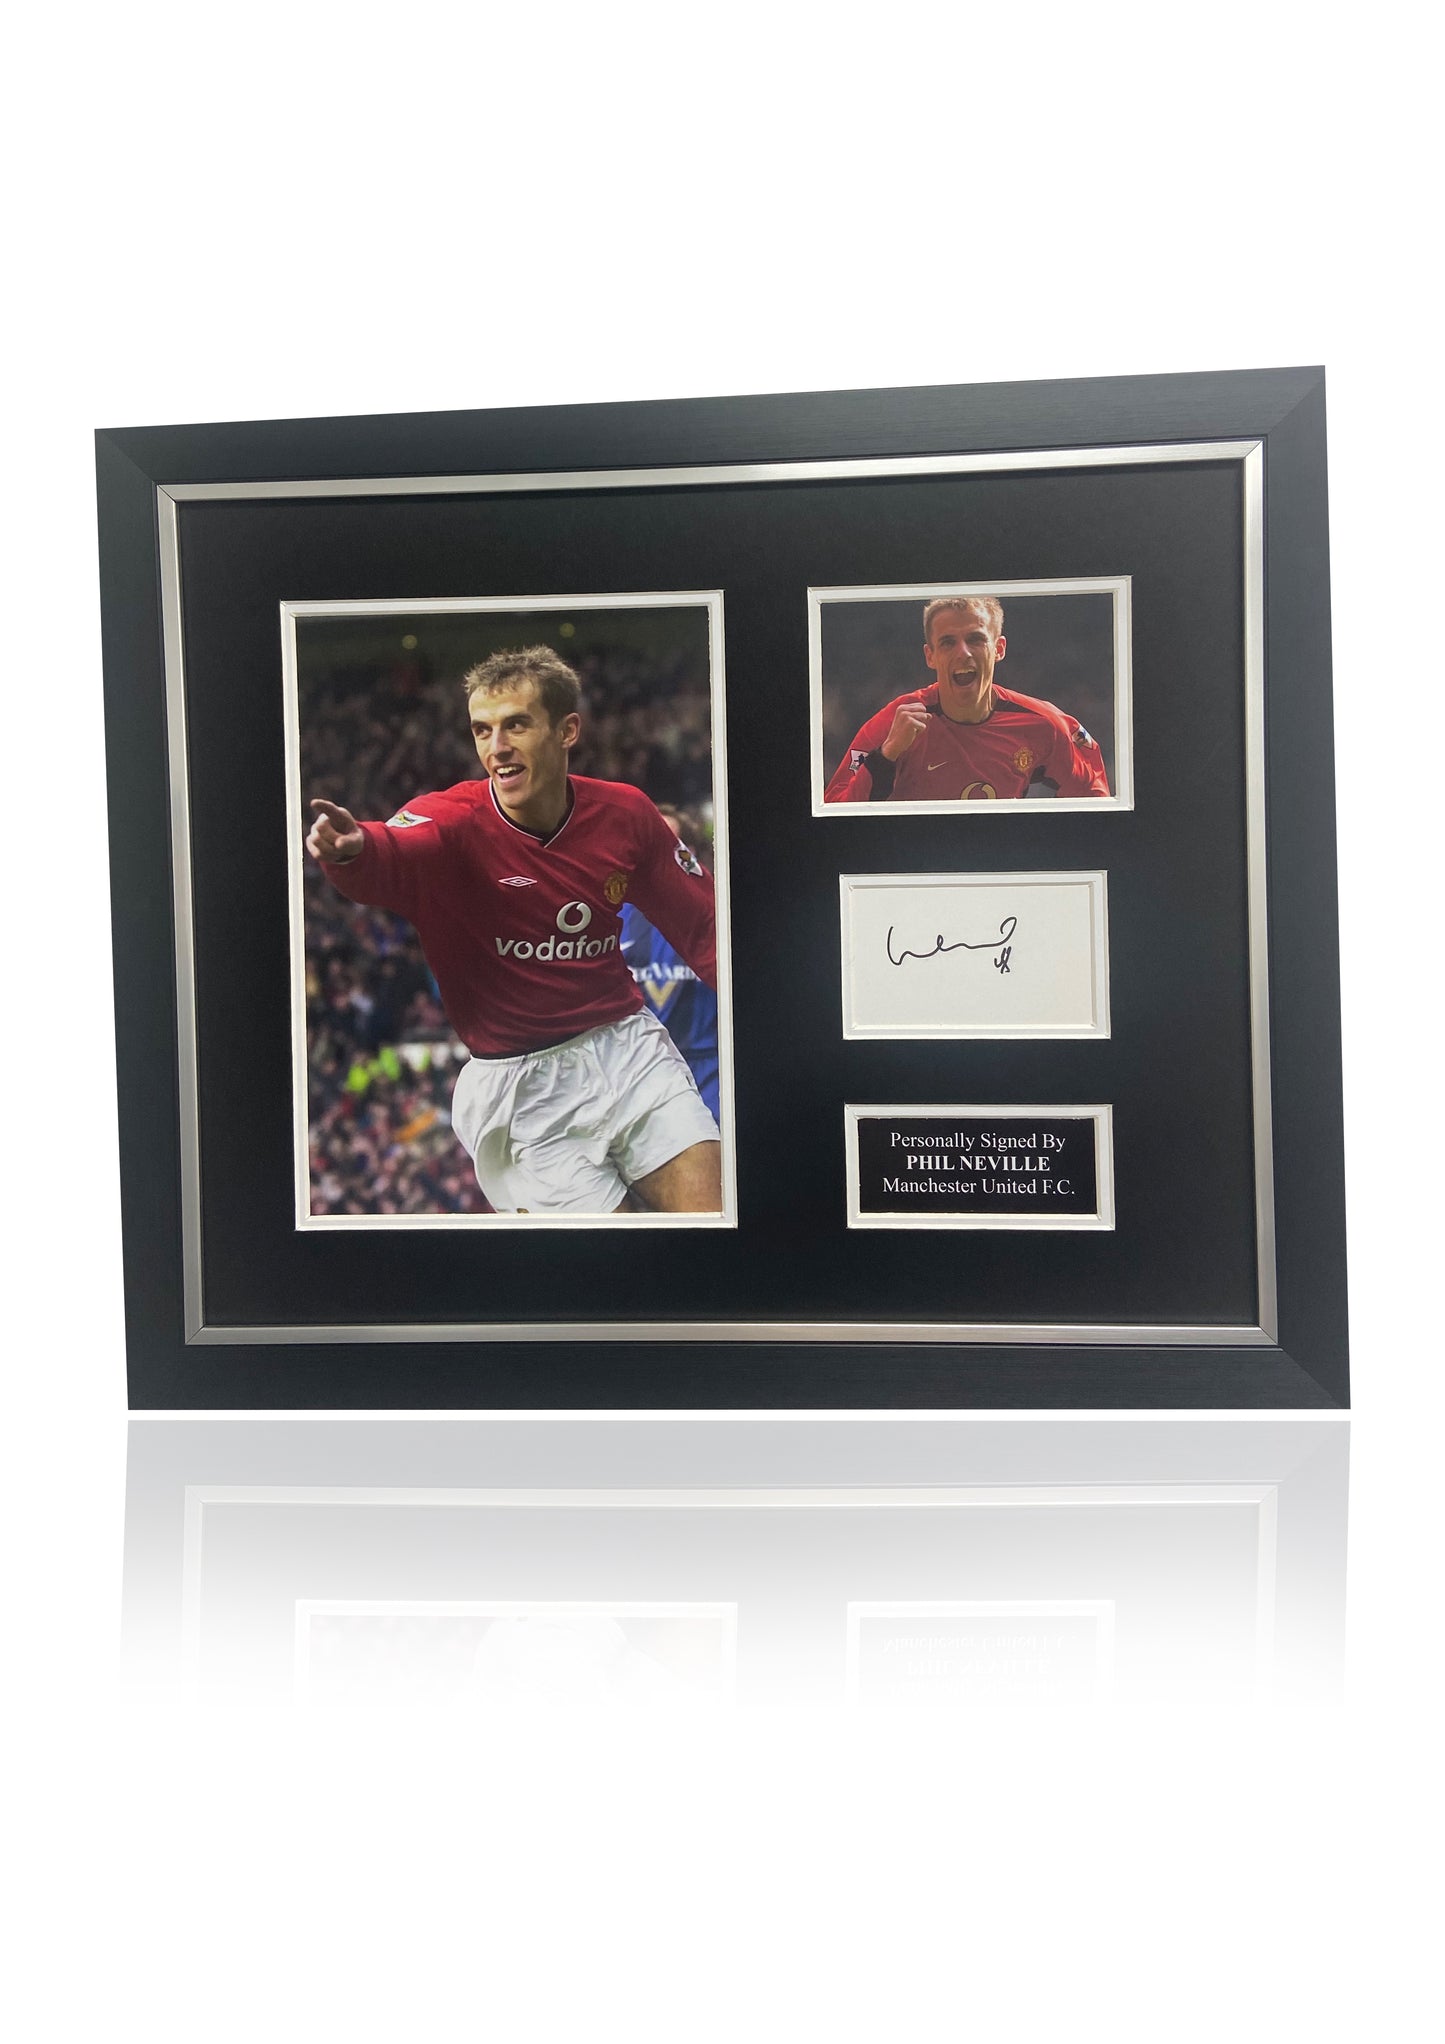 Phil Neville Manchester United signed framed photo montage